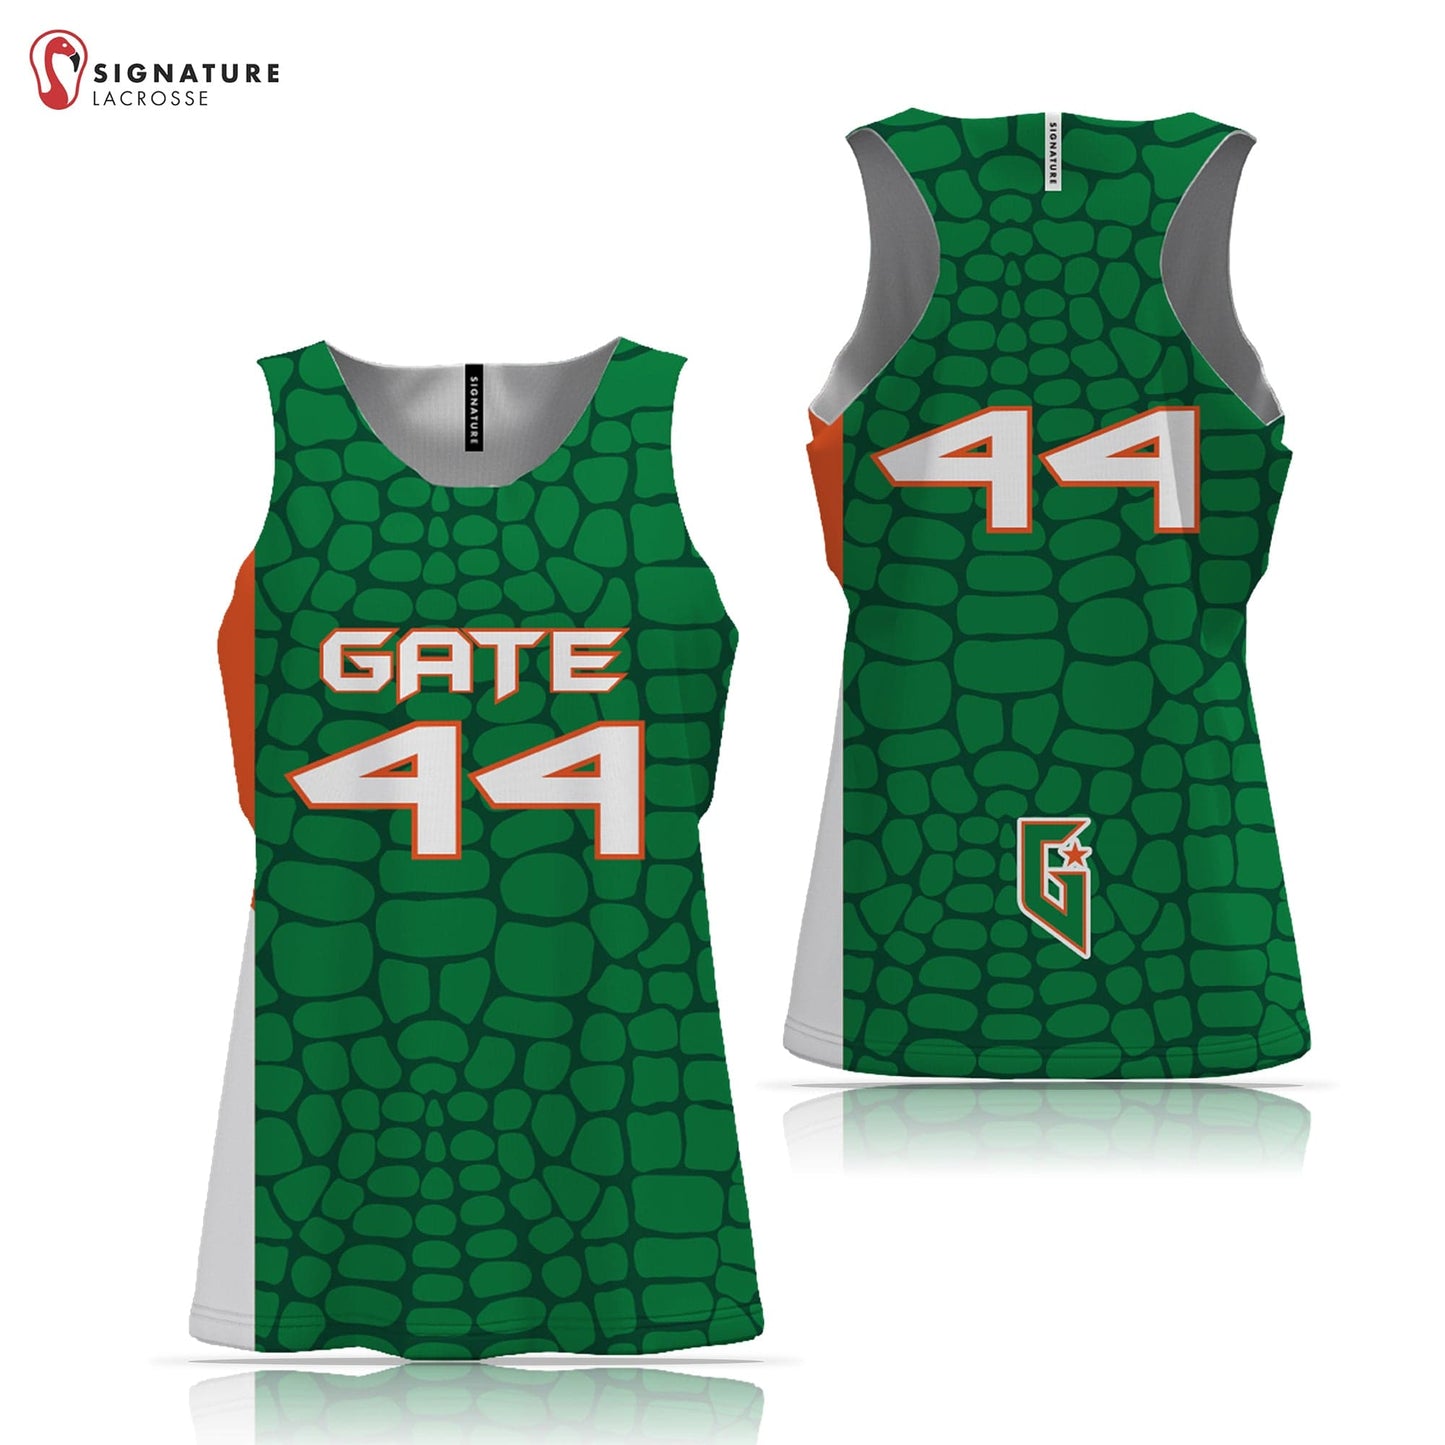 Gateway Gators Lacrosse Women's Game Pinnie Signature Lacrosse